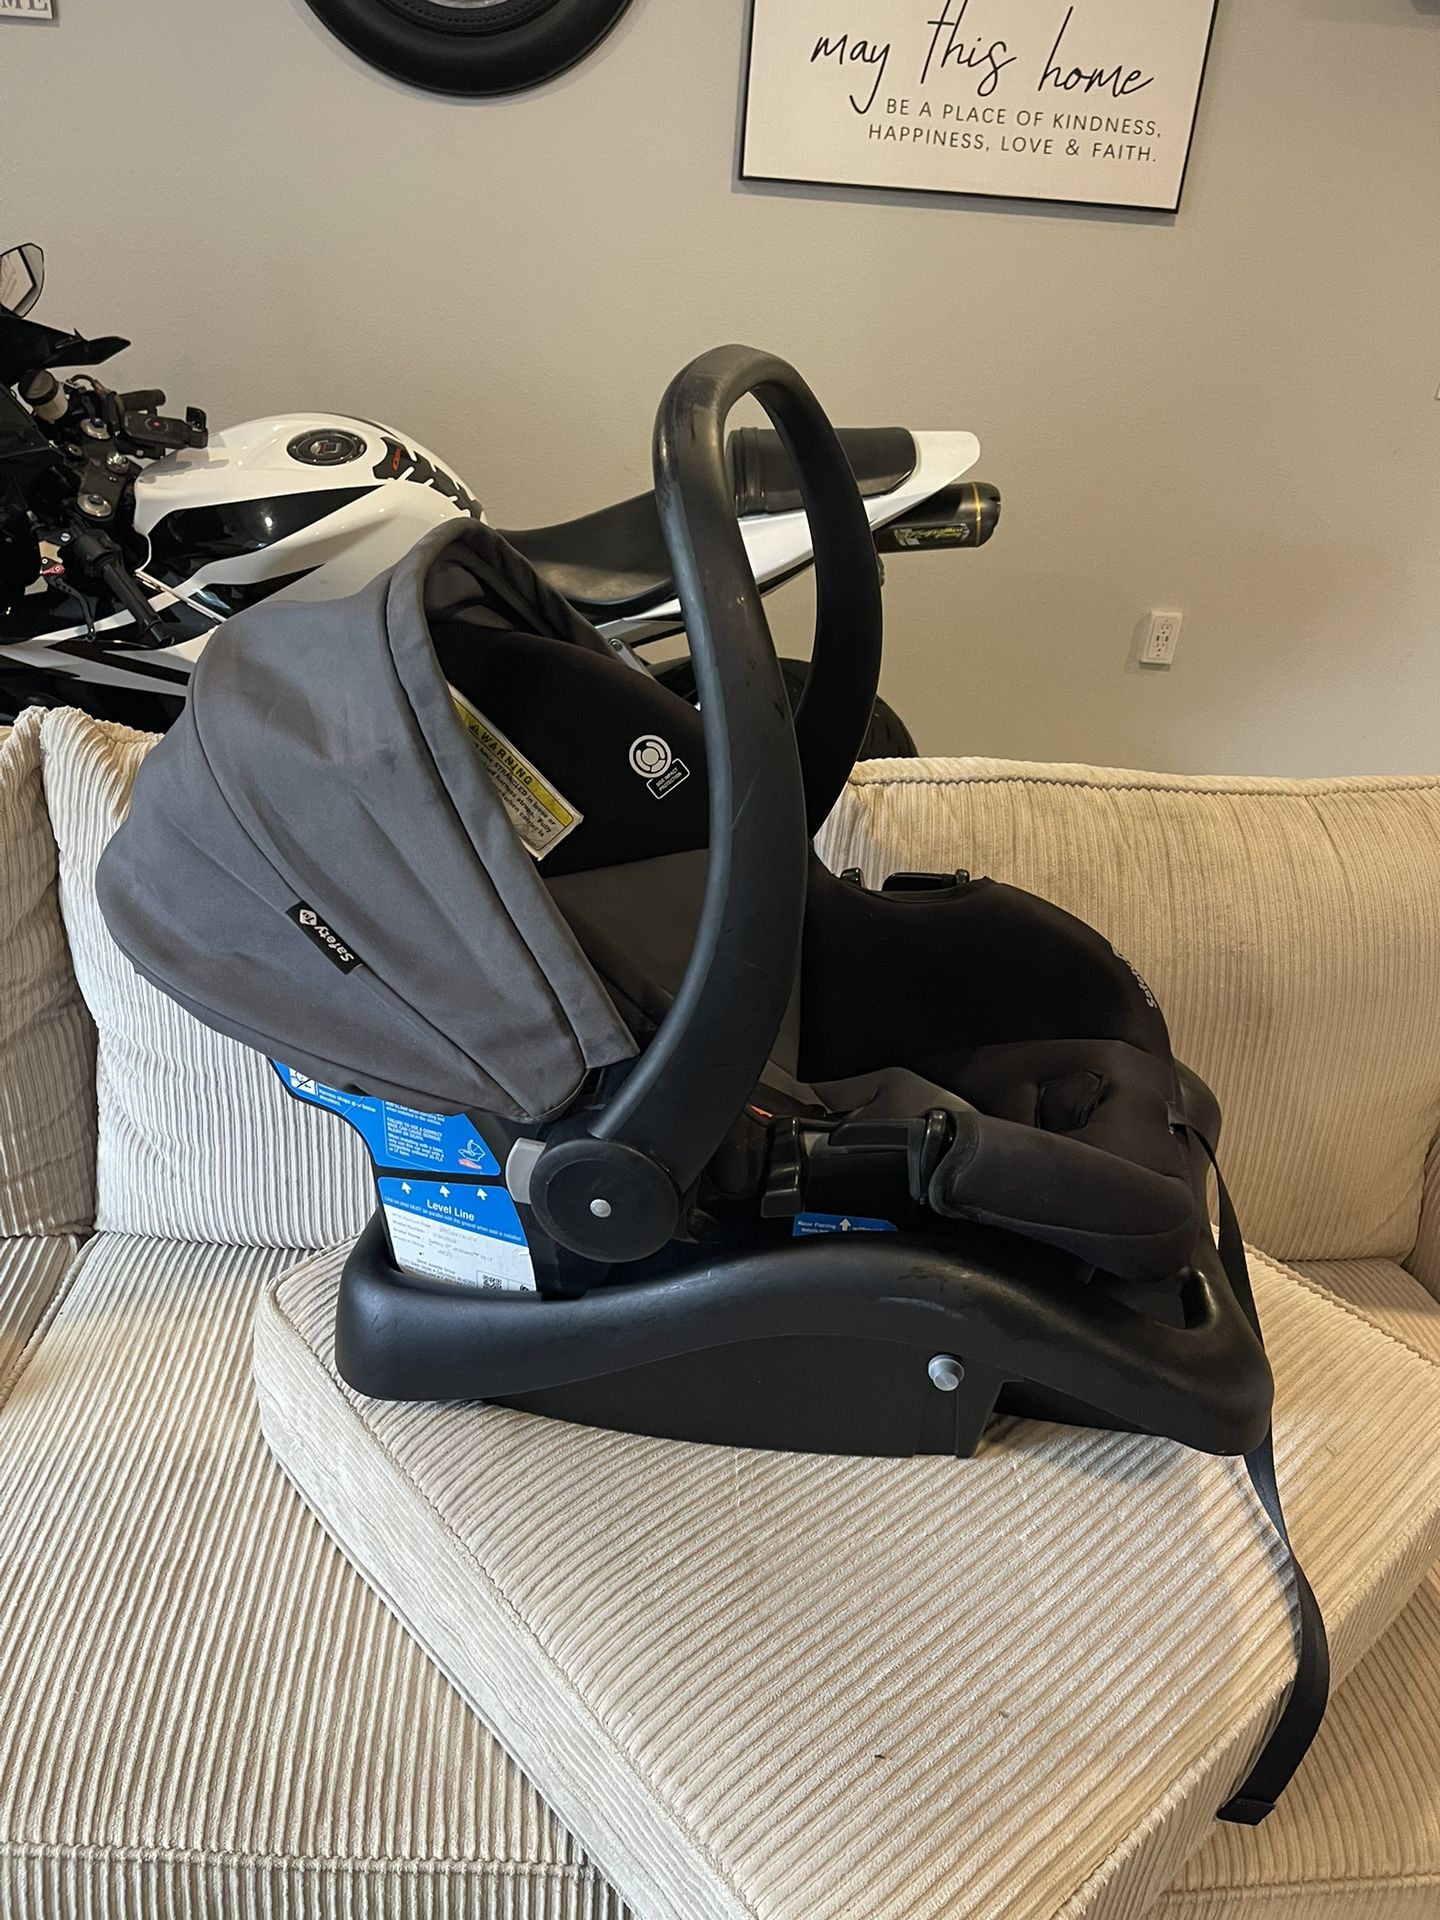 Safety 1st Infant Car seat 